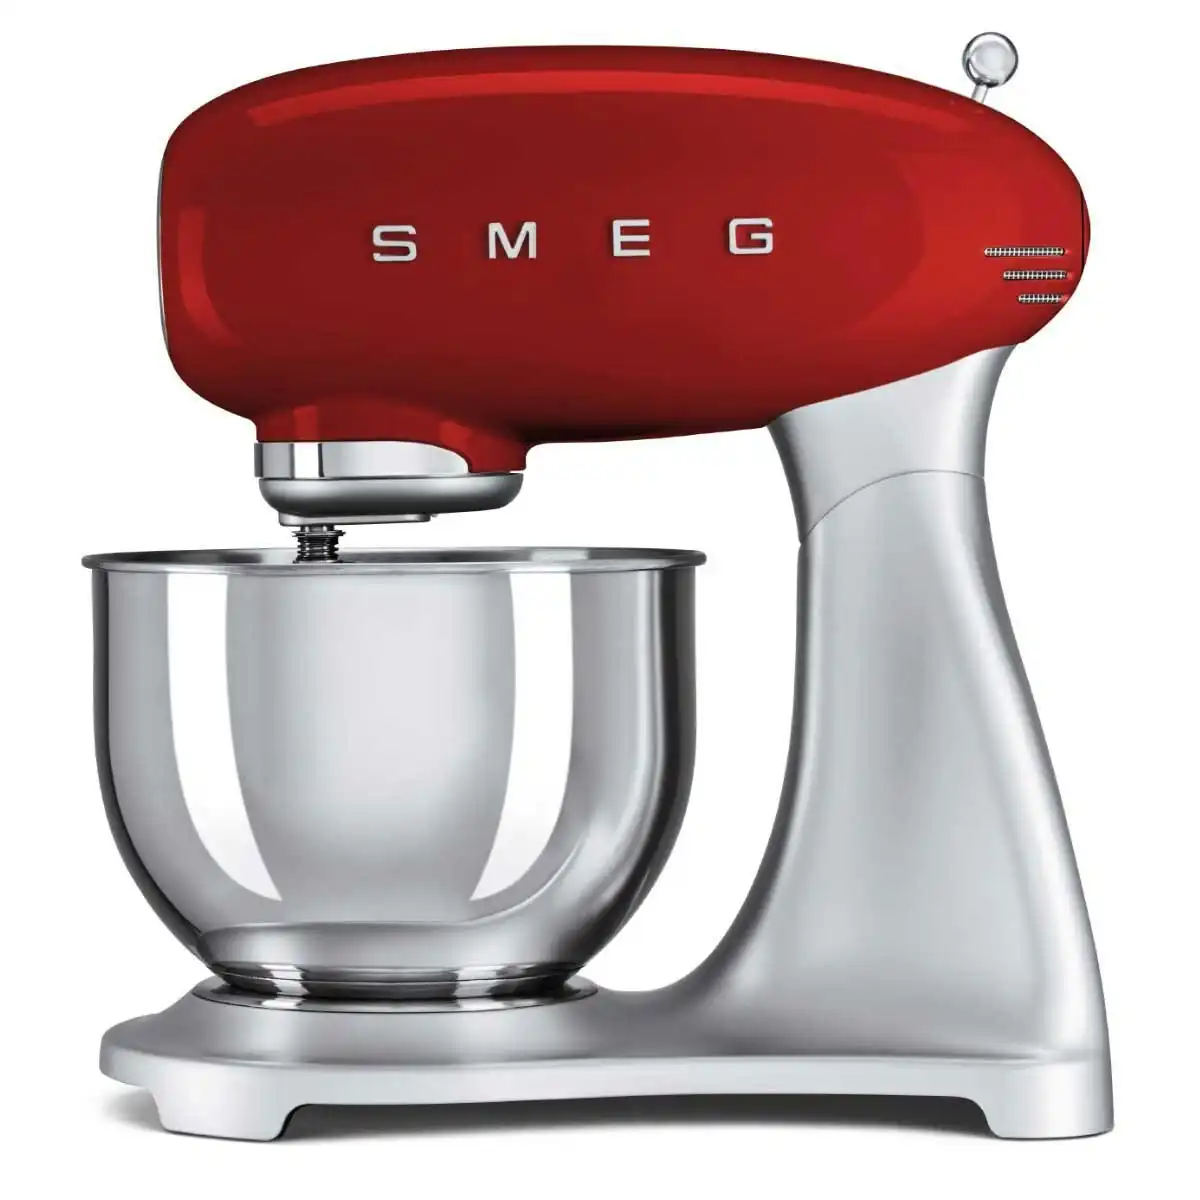 SMEG Red 50s Retro Style Stand Mixer